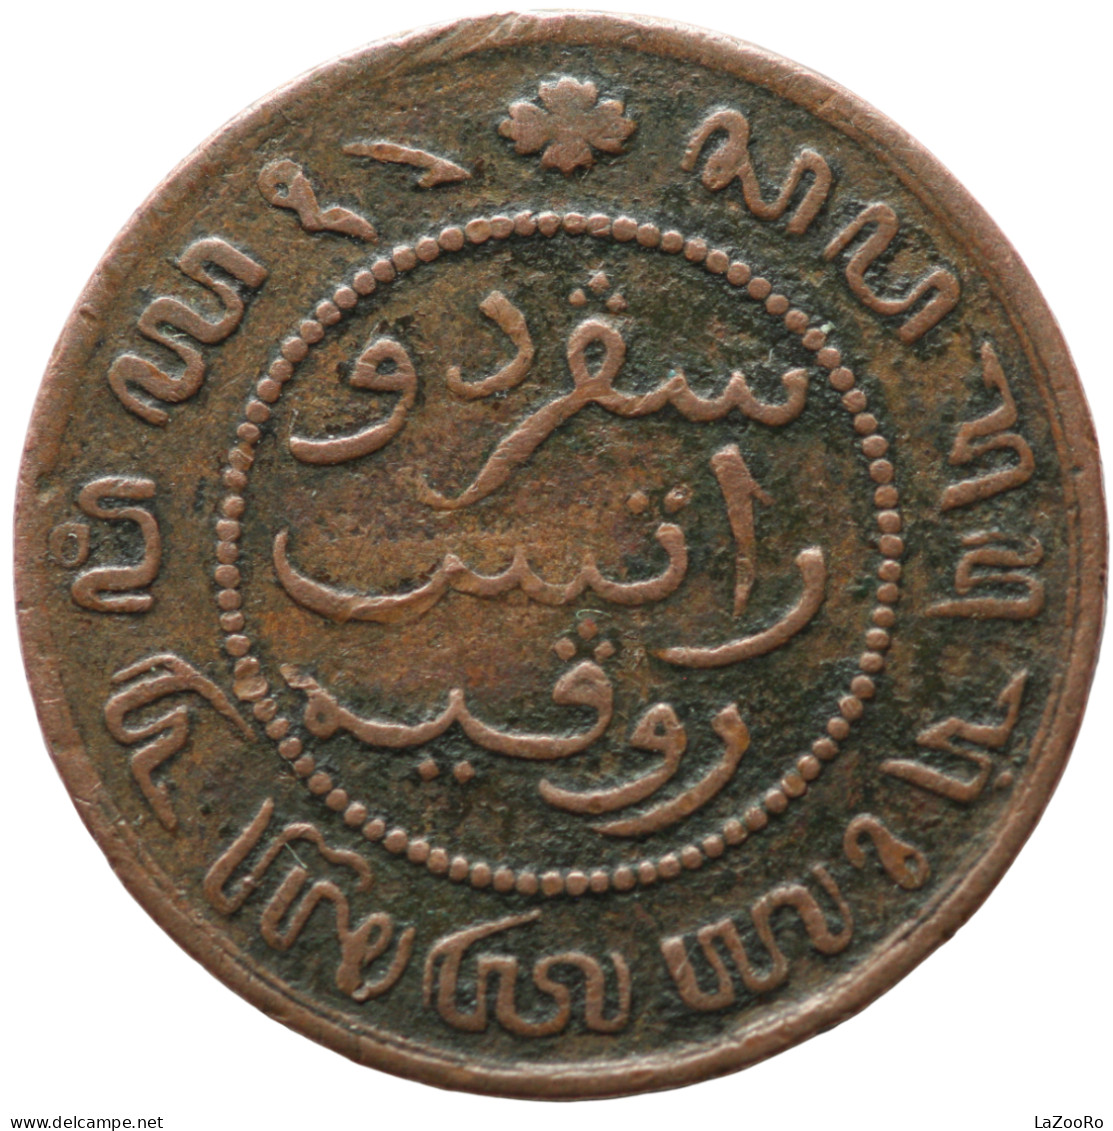 LaZooRo: Dutch East Indies 1/2 Cent 1859 VF - Dutch East Indies